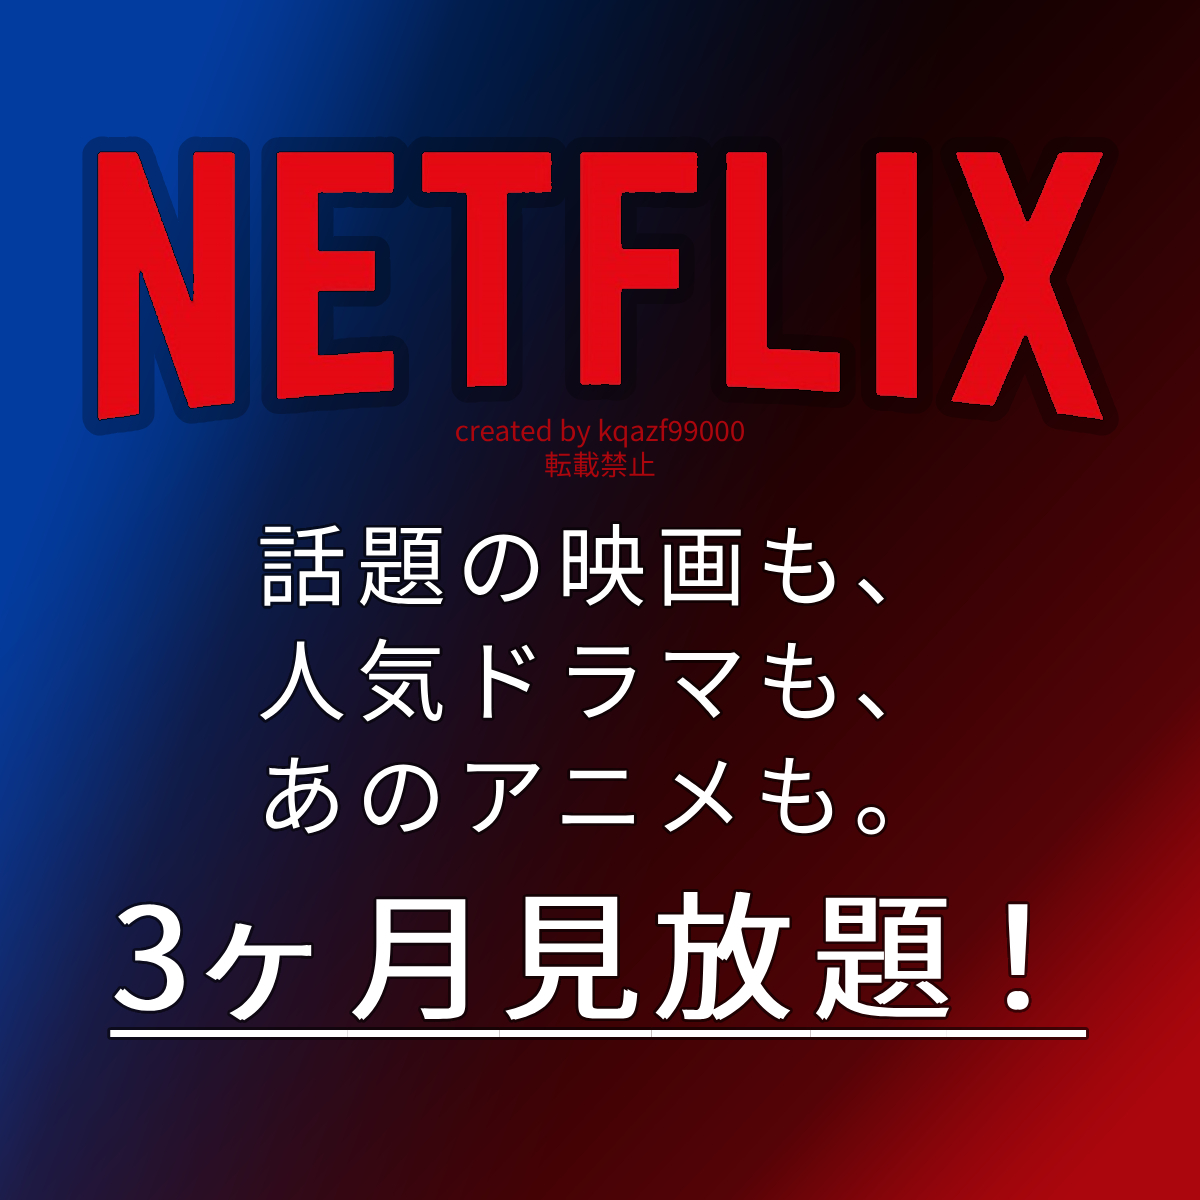 Netflix Premium 3ヶ月 スマートテレビ Fire stick tv Android IOS 4K UHD 対応 進撃の巨人 幽遊白書 キッズ ファミリー向け 韓流 作品有 の画像1